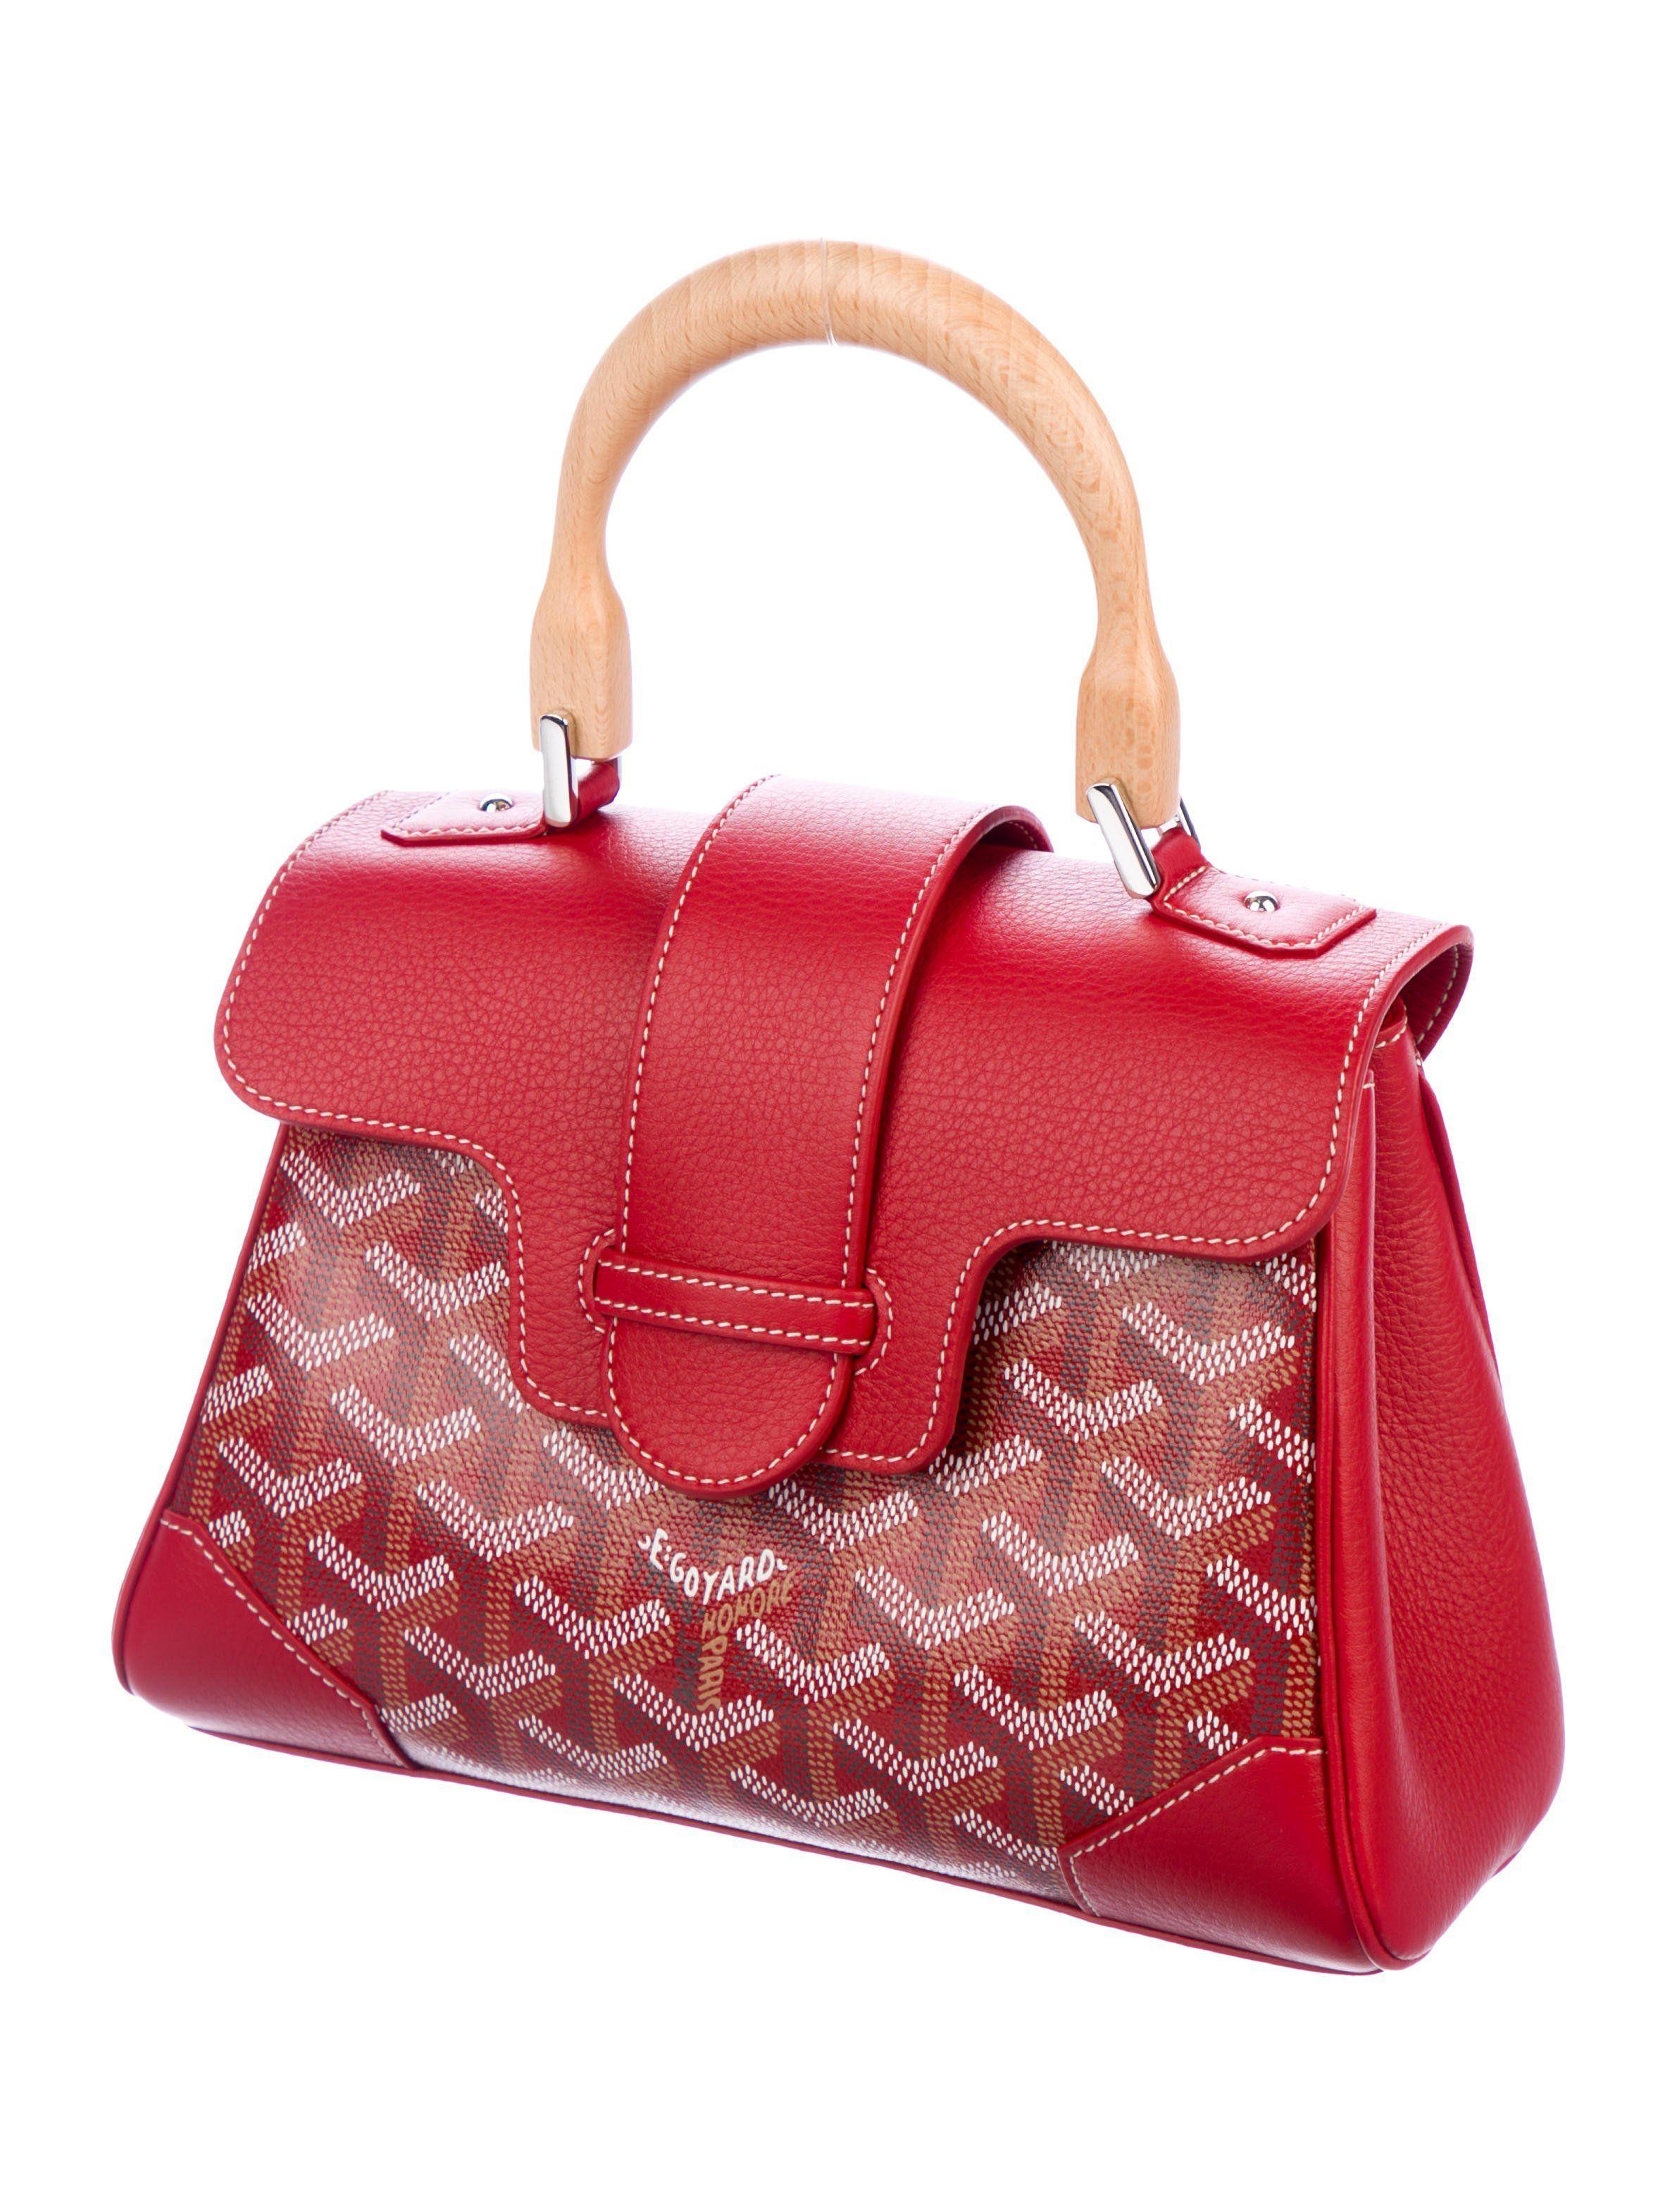 Goyard Red Logo - Goyard Red Monogram Logo Leather Kelly Style Top Handle Satchel Bag